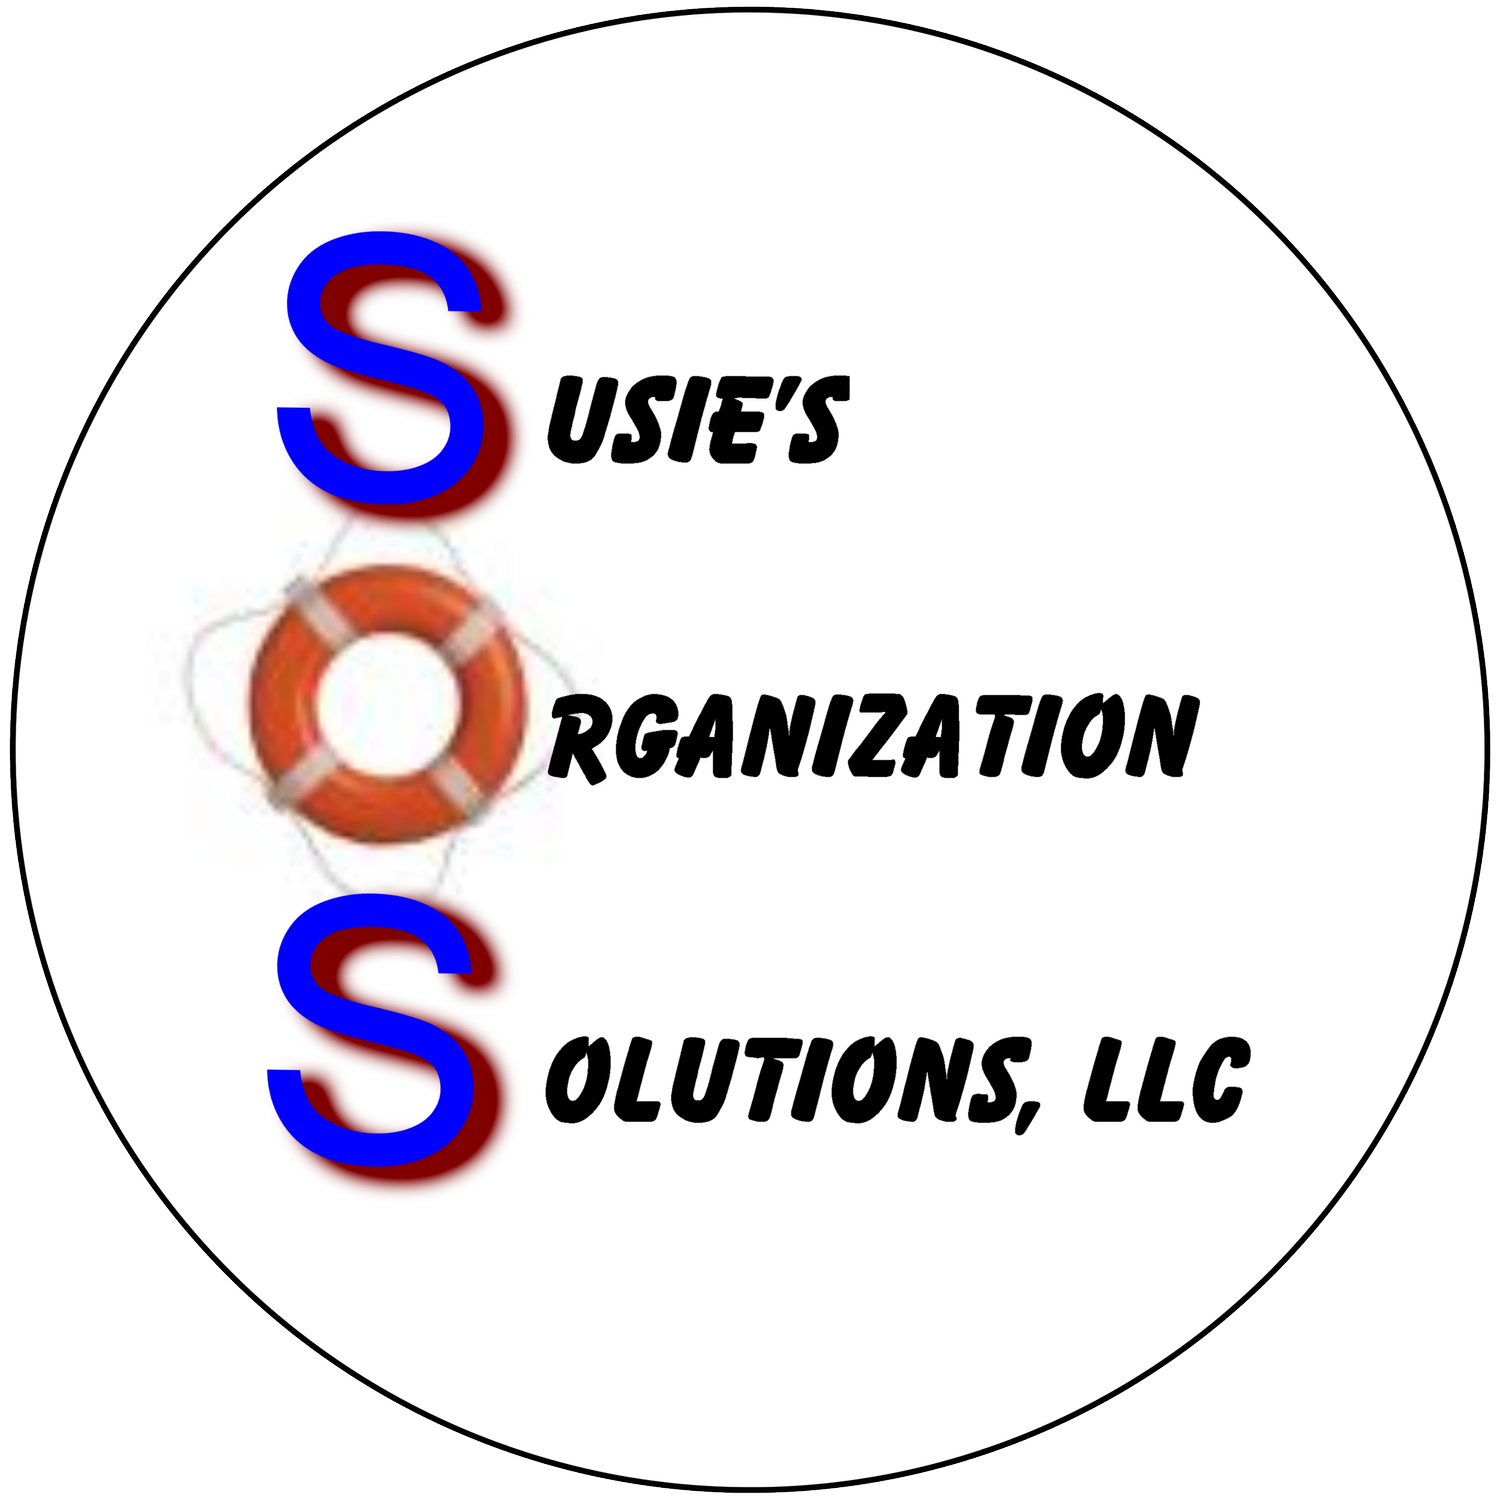 Susie’s Organization Solutions